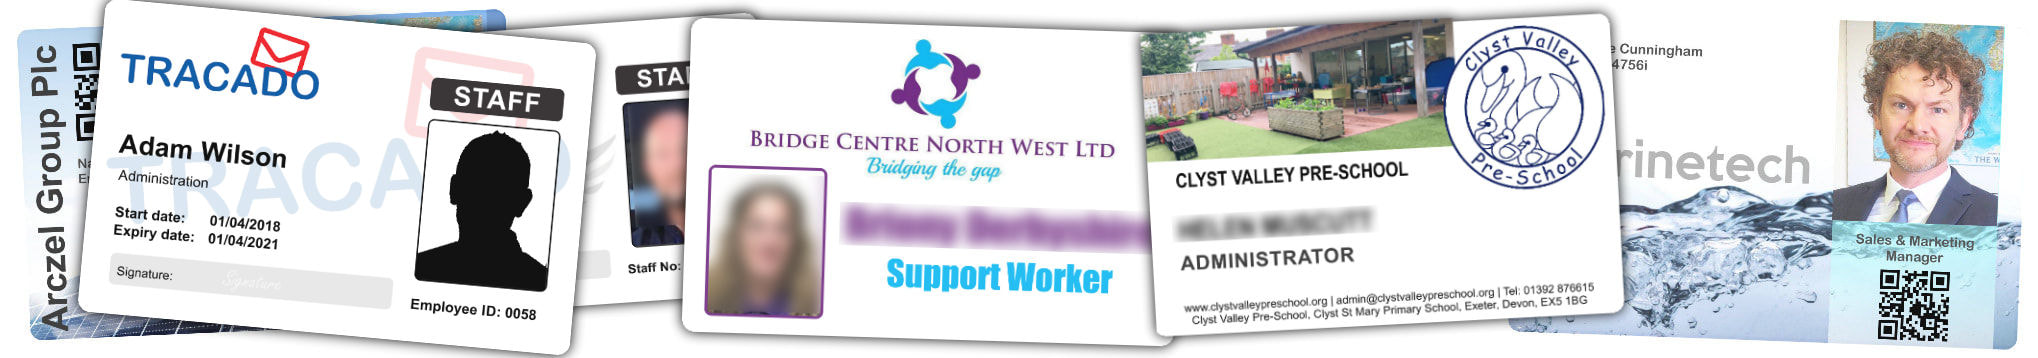 Carlisle ID card printing | staff photo ID cards | company employee ID card print service | Local Identity Card Printing | Custom Design 